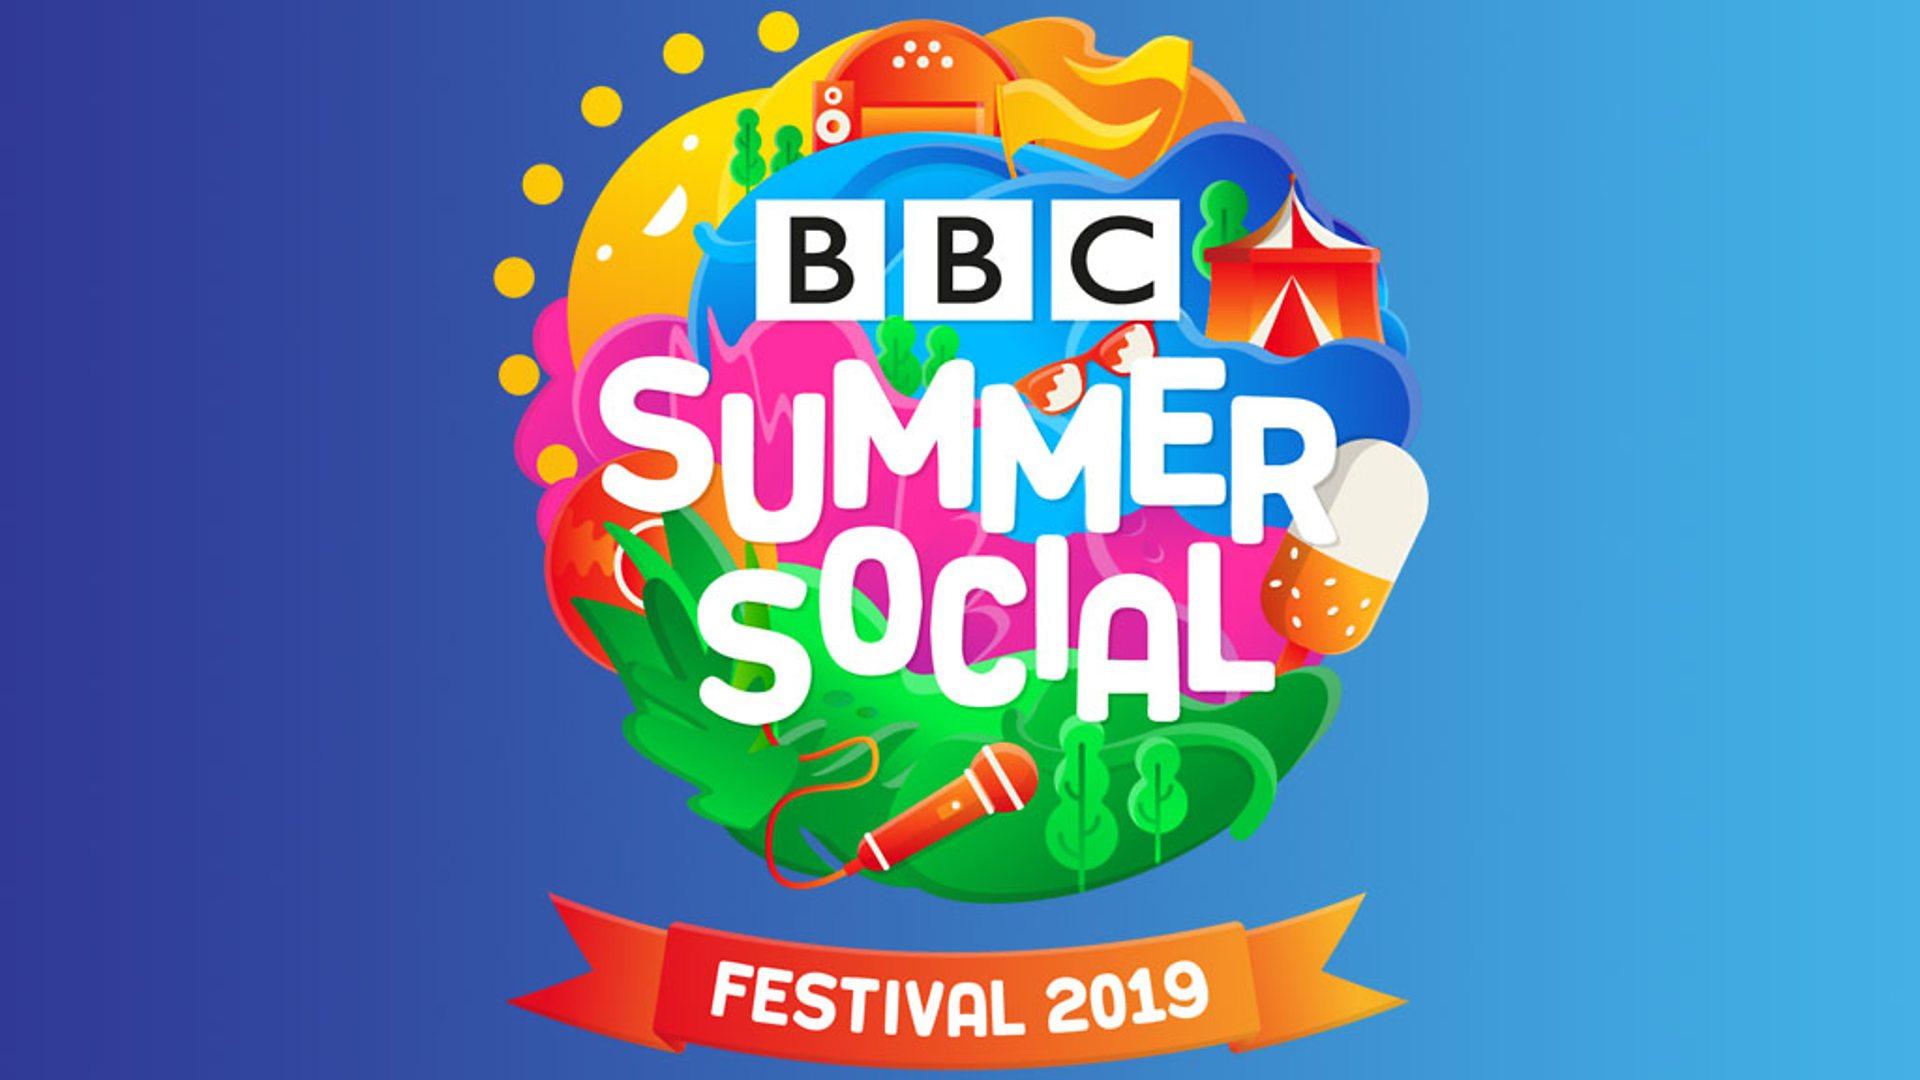 BBC Summer Social Festival Event Info 2019